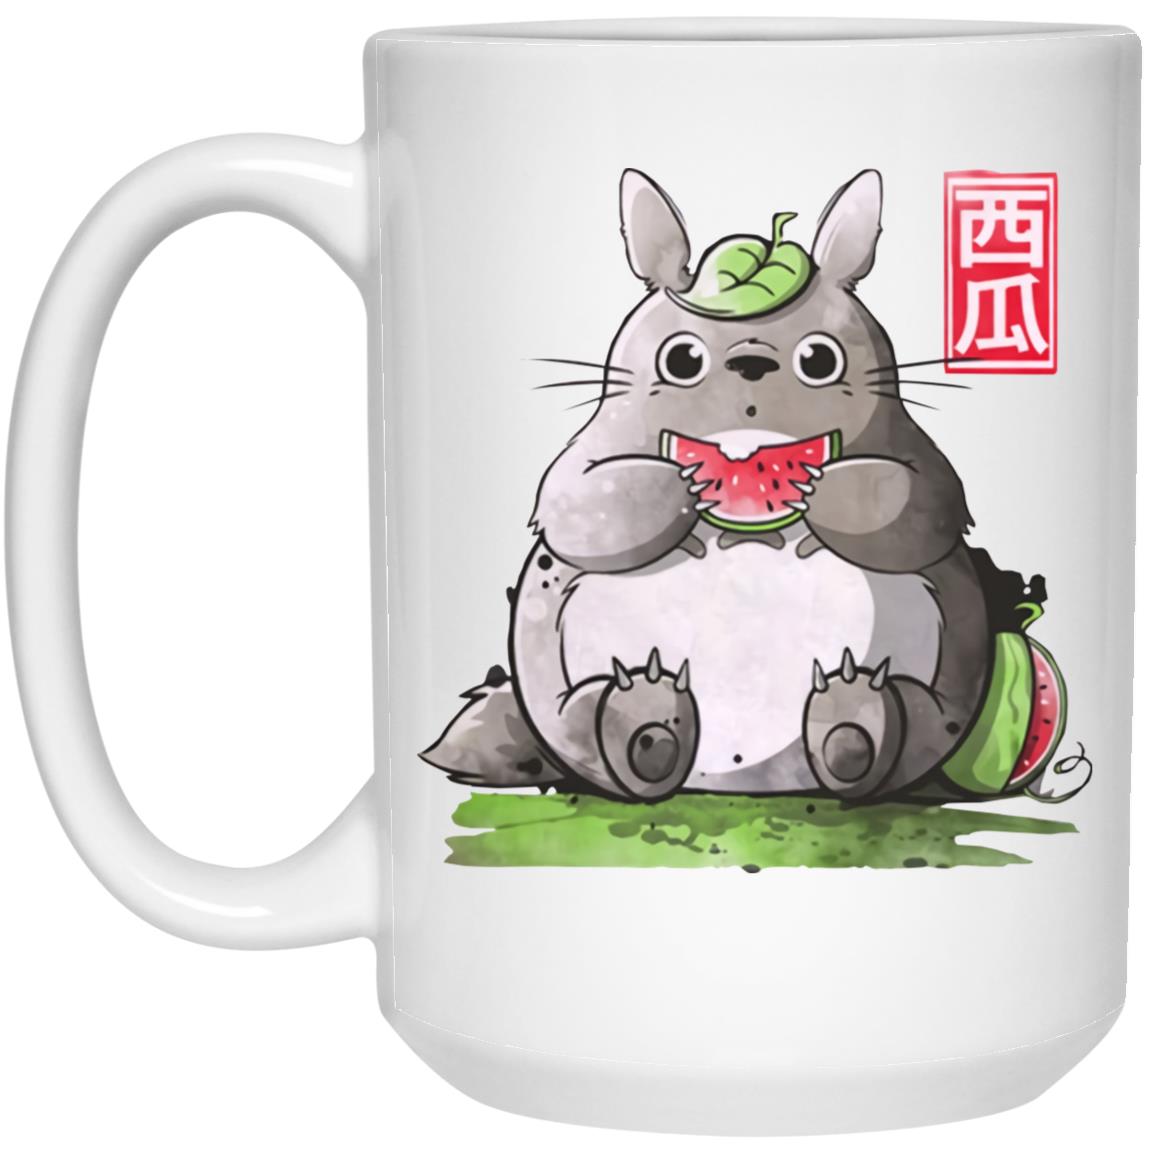 Totoro and Watermelon Mug Ghibli Store ghibli.store